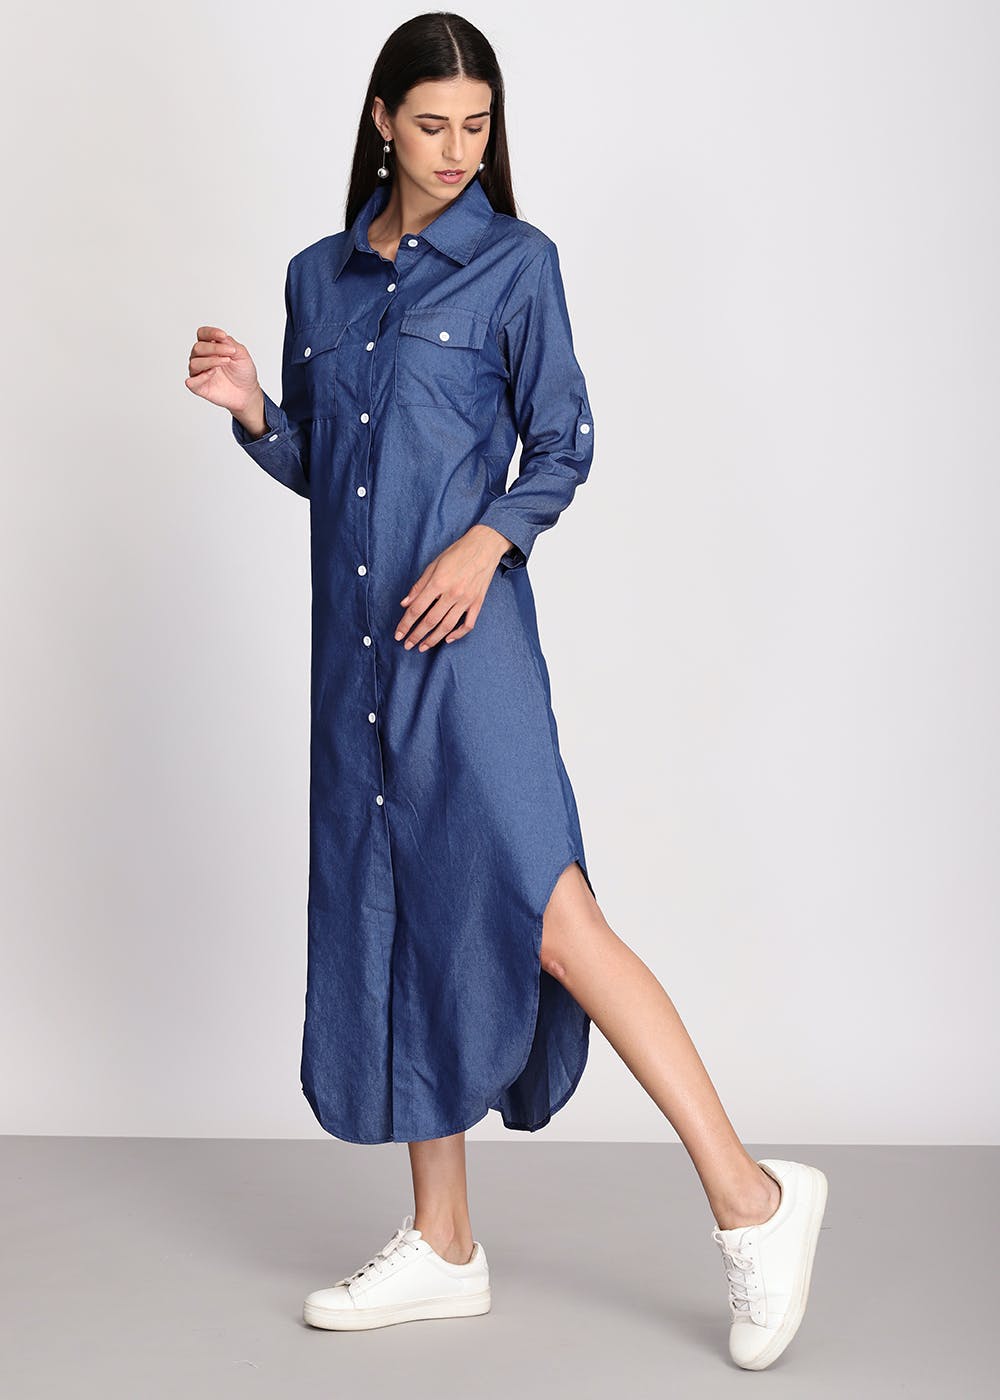 Buy StyleStone (3323DnmCrossBtnDrsS Women's Denim Dress with V Neck Blue at  Amazon.in